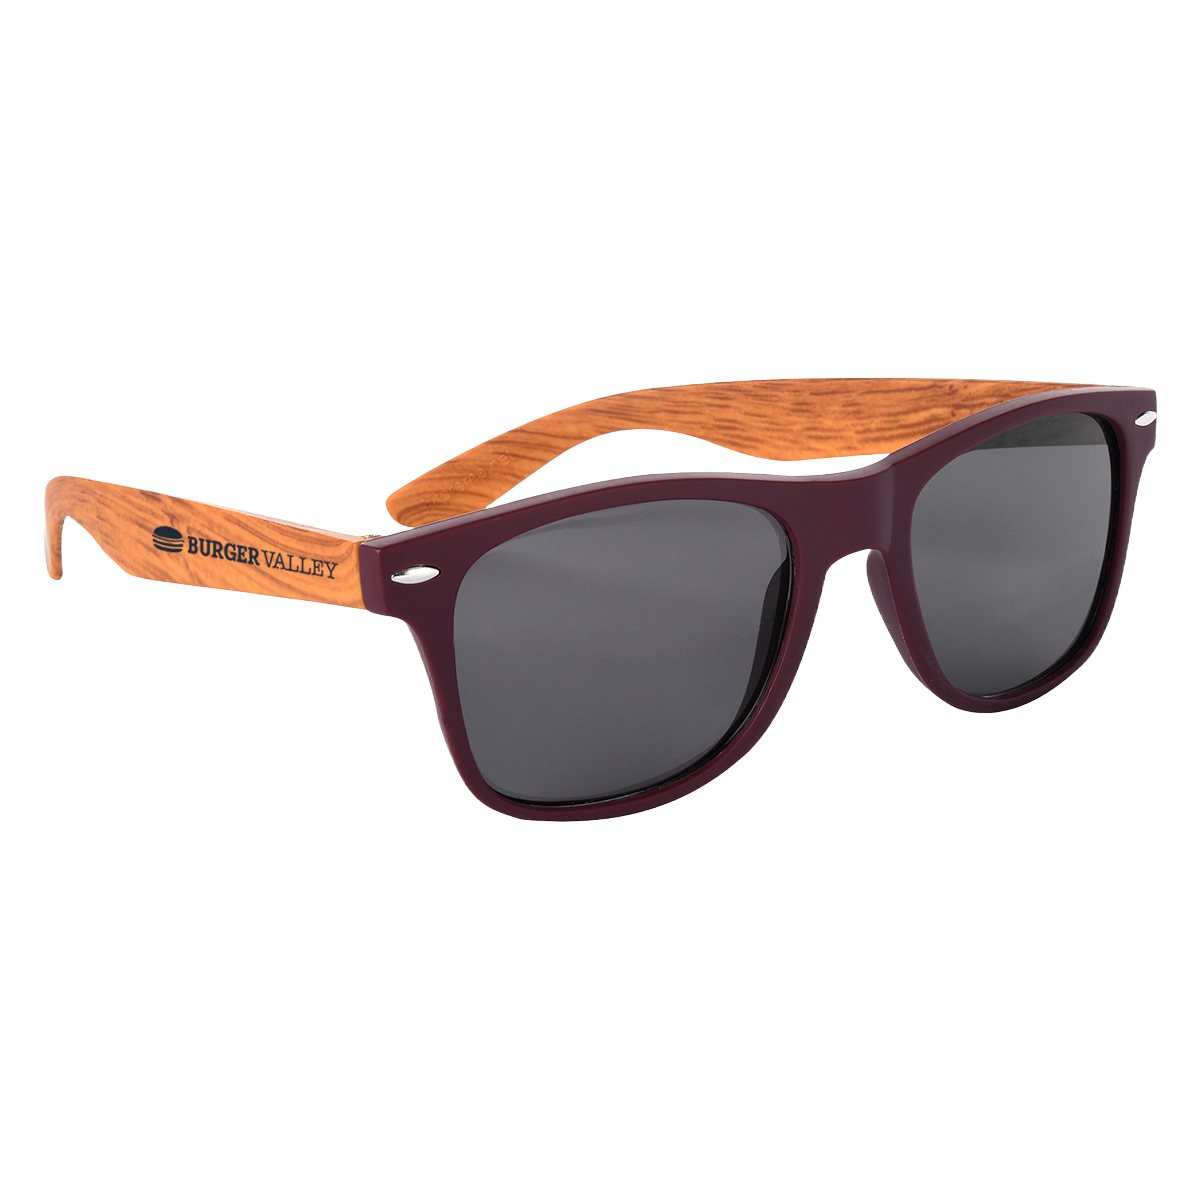 Surfrider Malibu Sunglasses